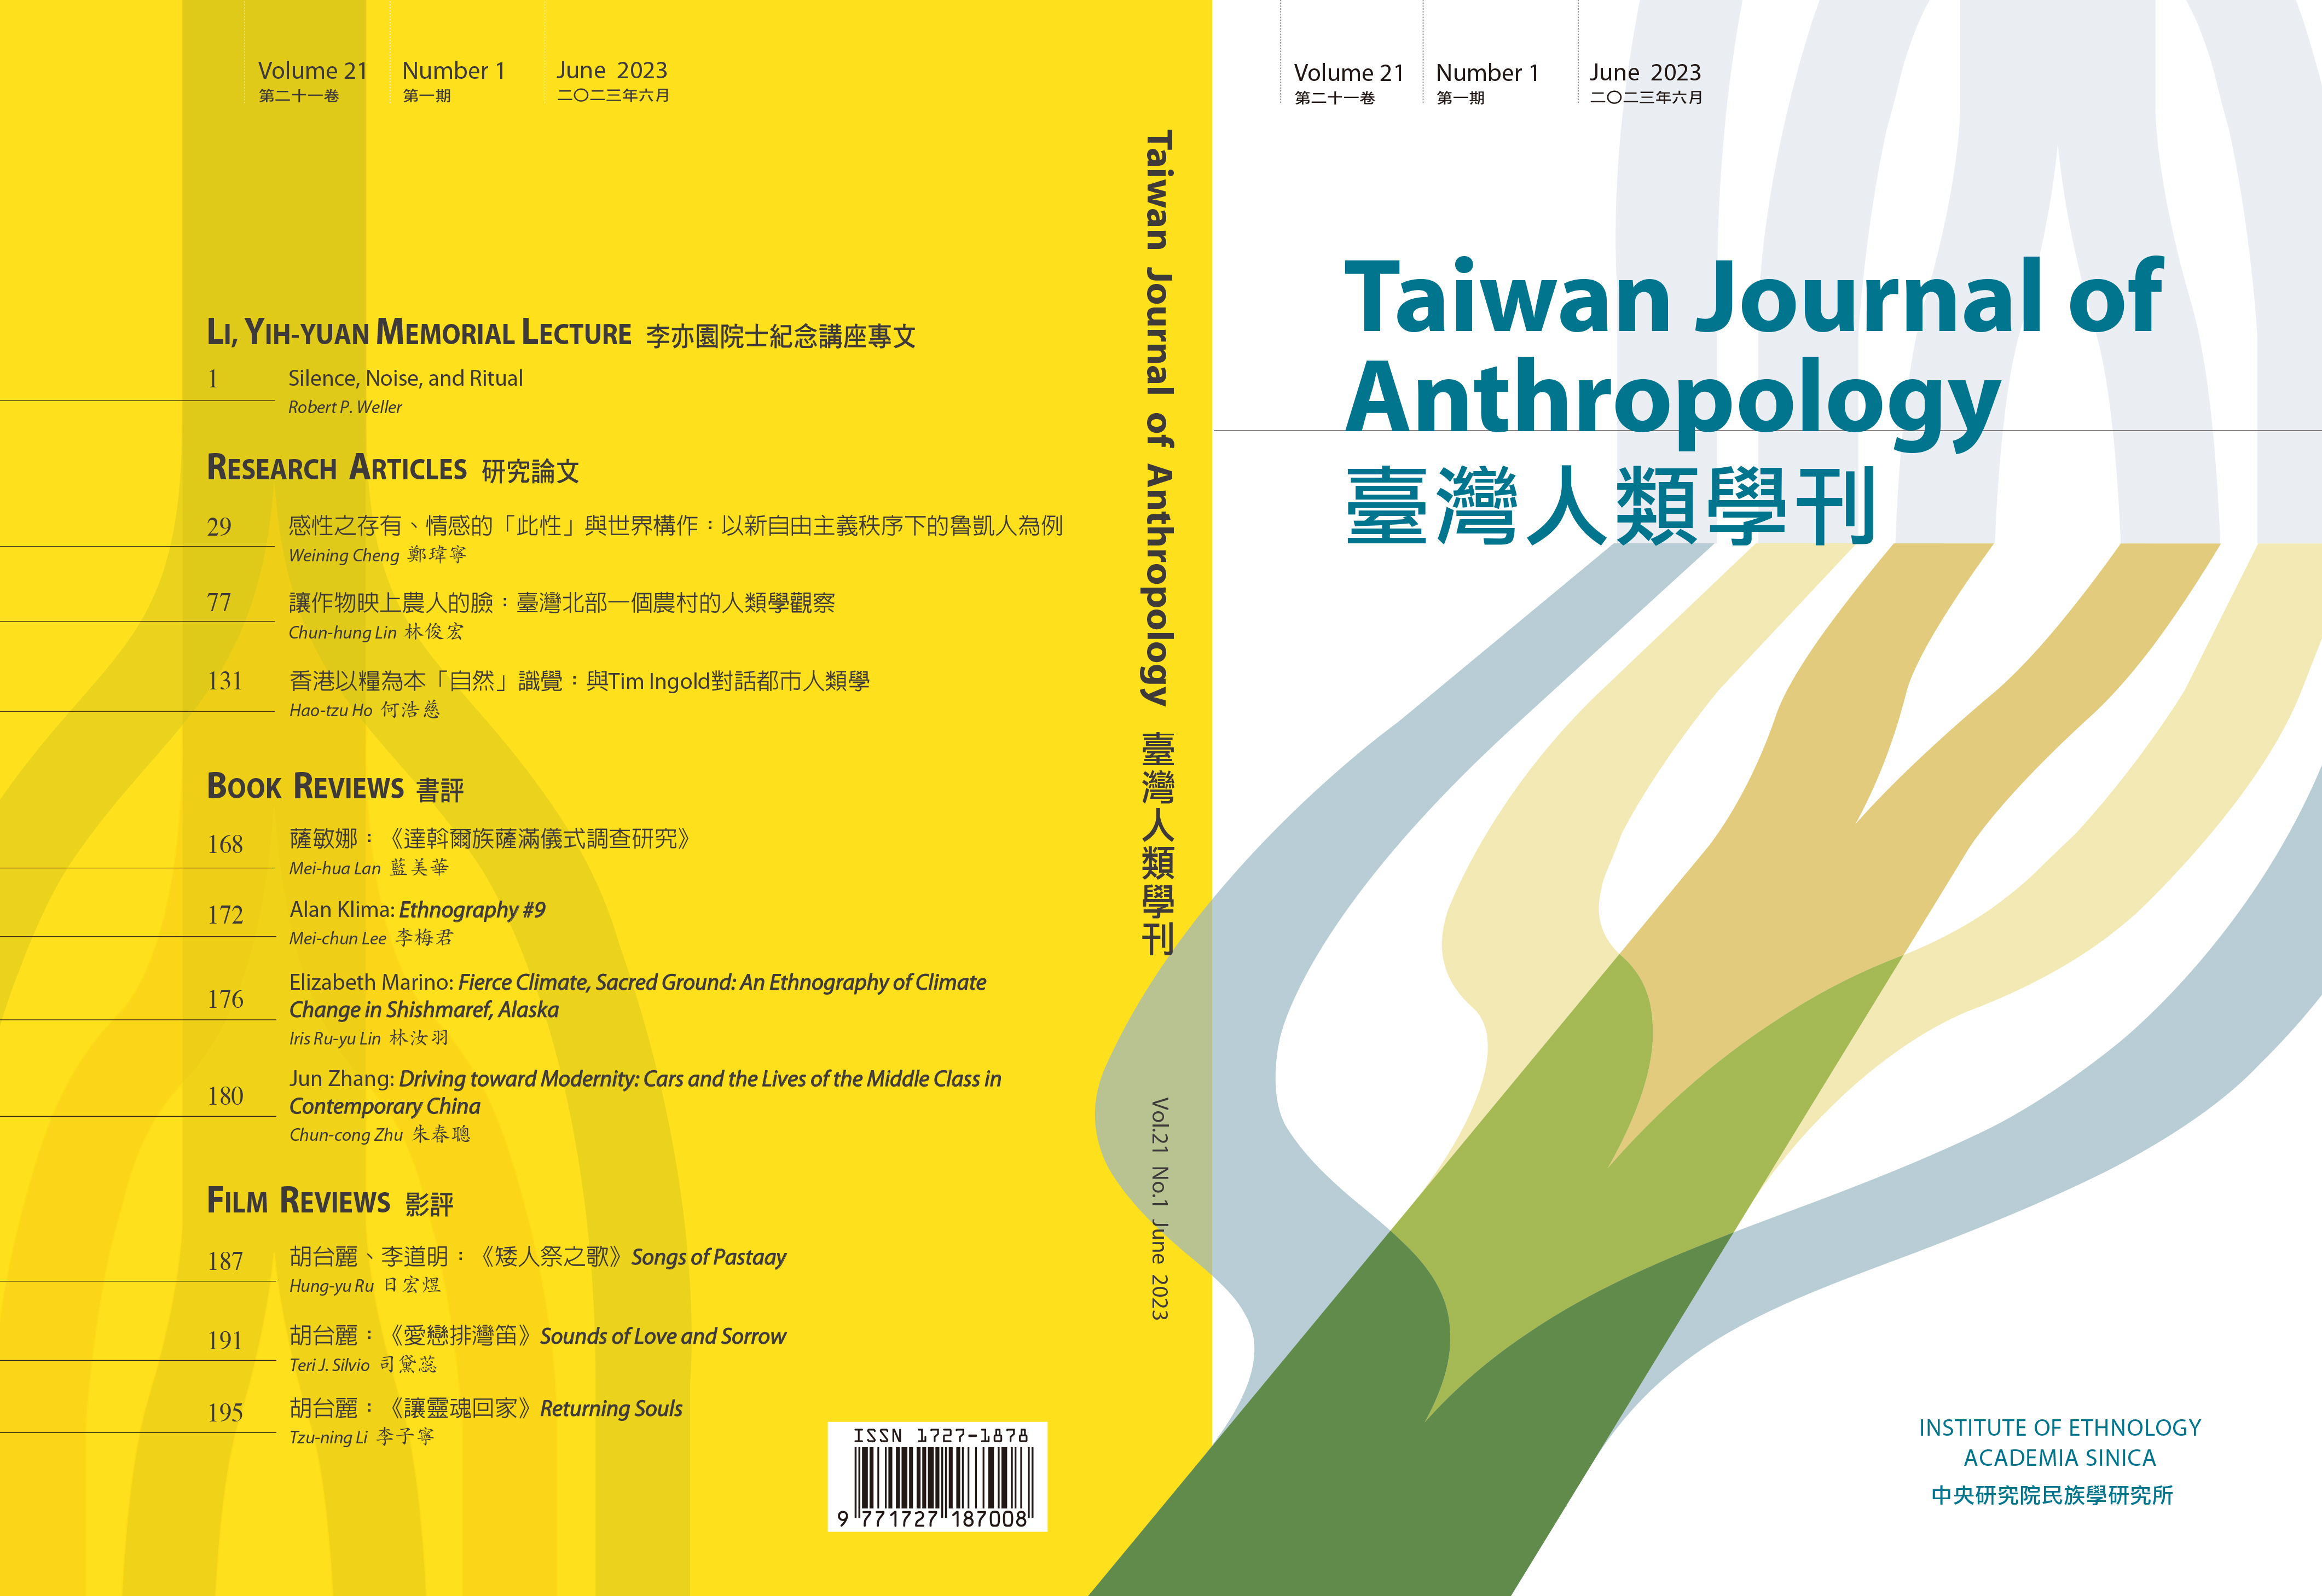 Taiwan Journal of Anthropology, Academia Sinica, Volume